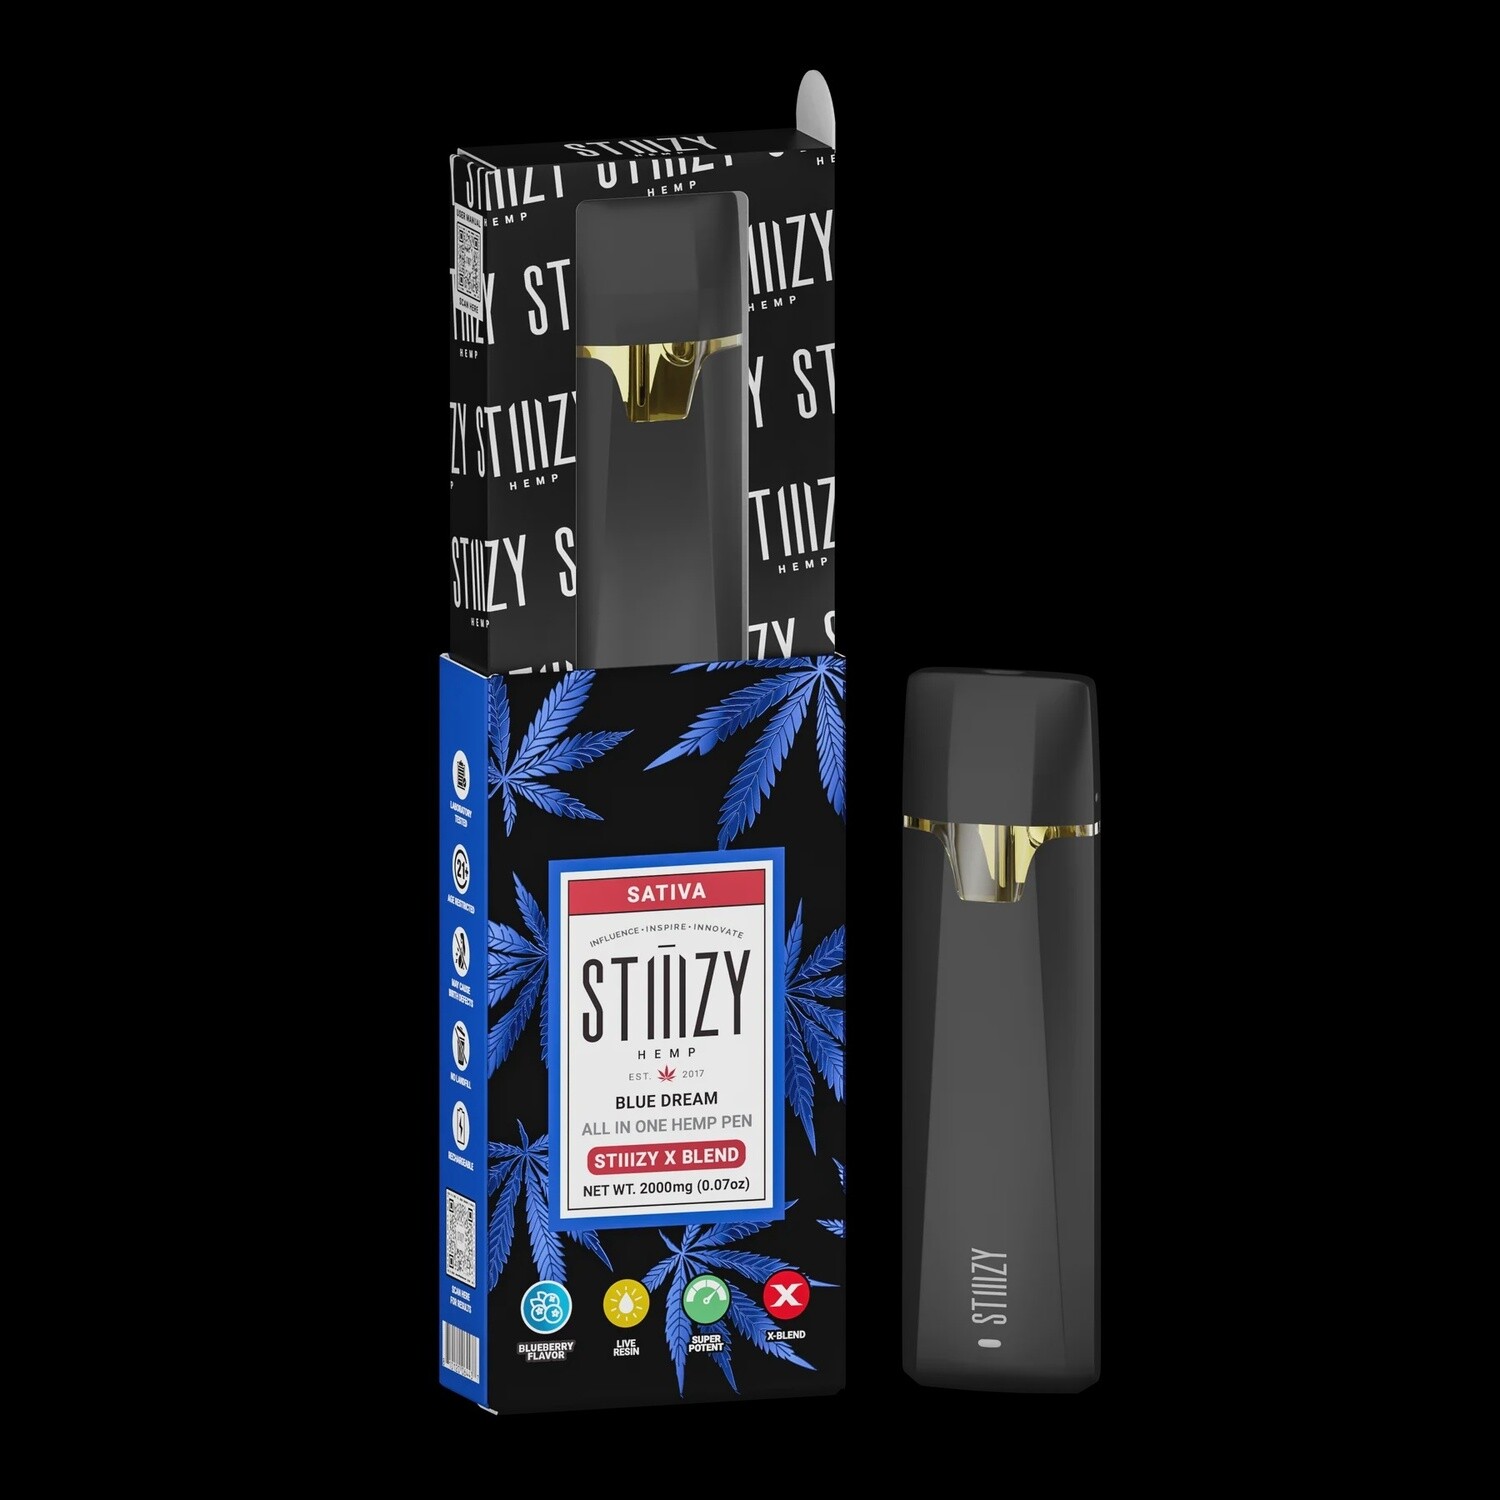 Stiiizy - X Blend Live Resin Disposable